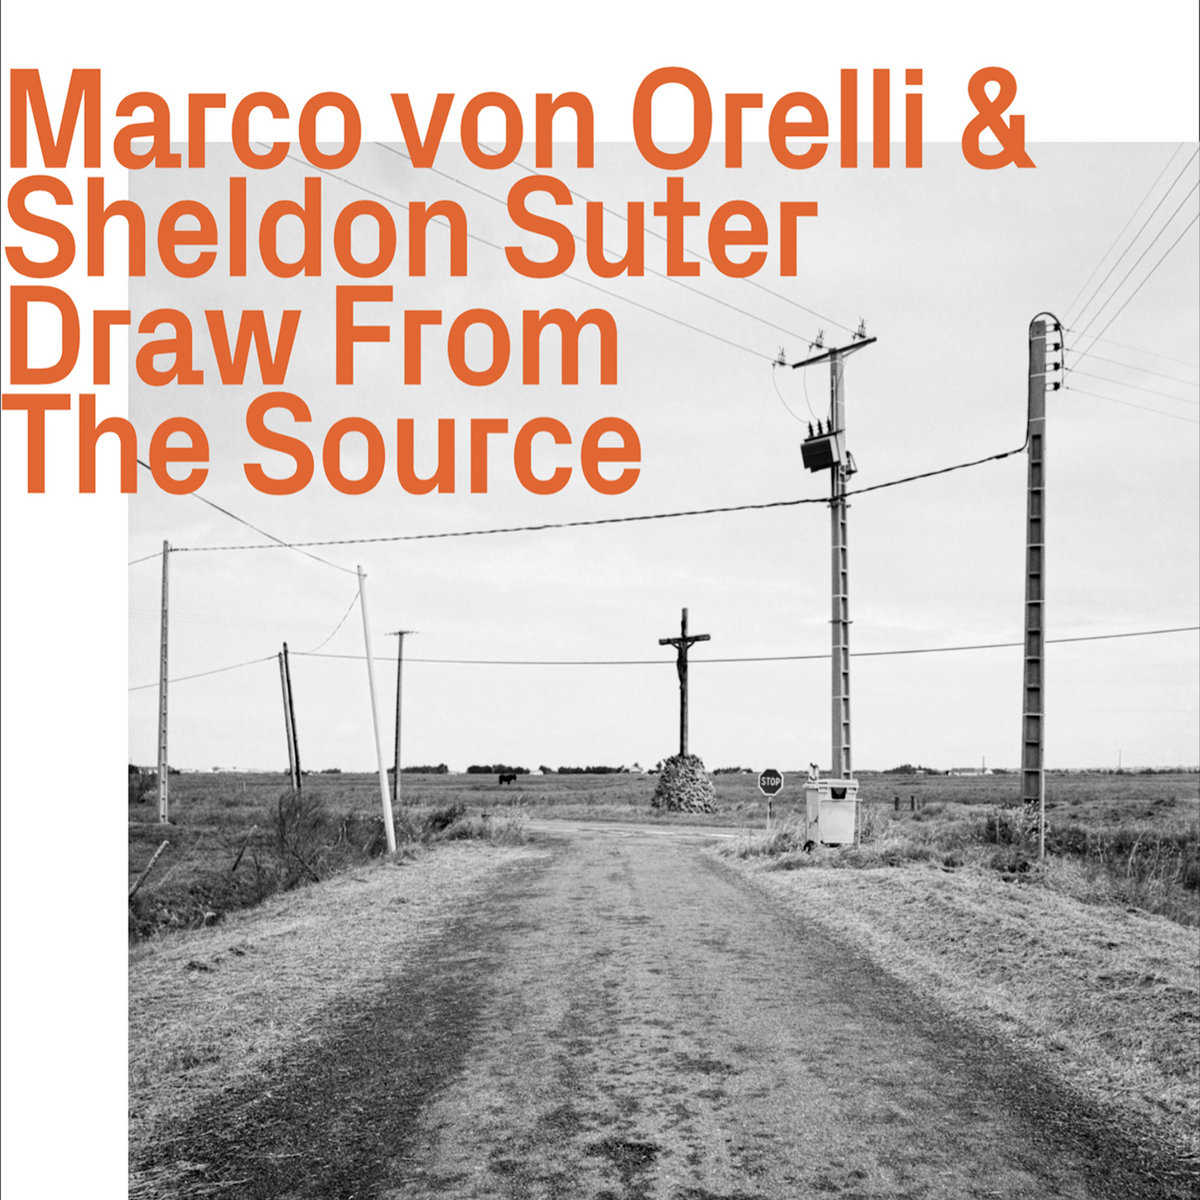 Marco von Orelli & Sheldon Suter, Draw From The Source